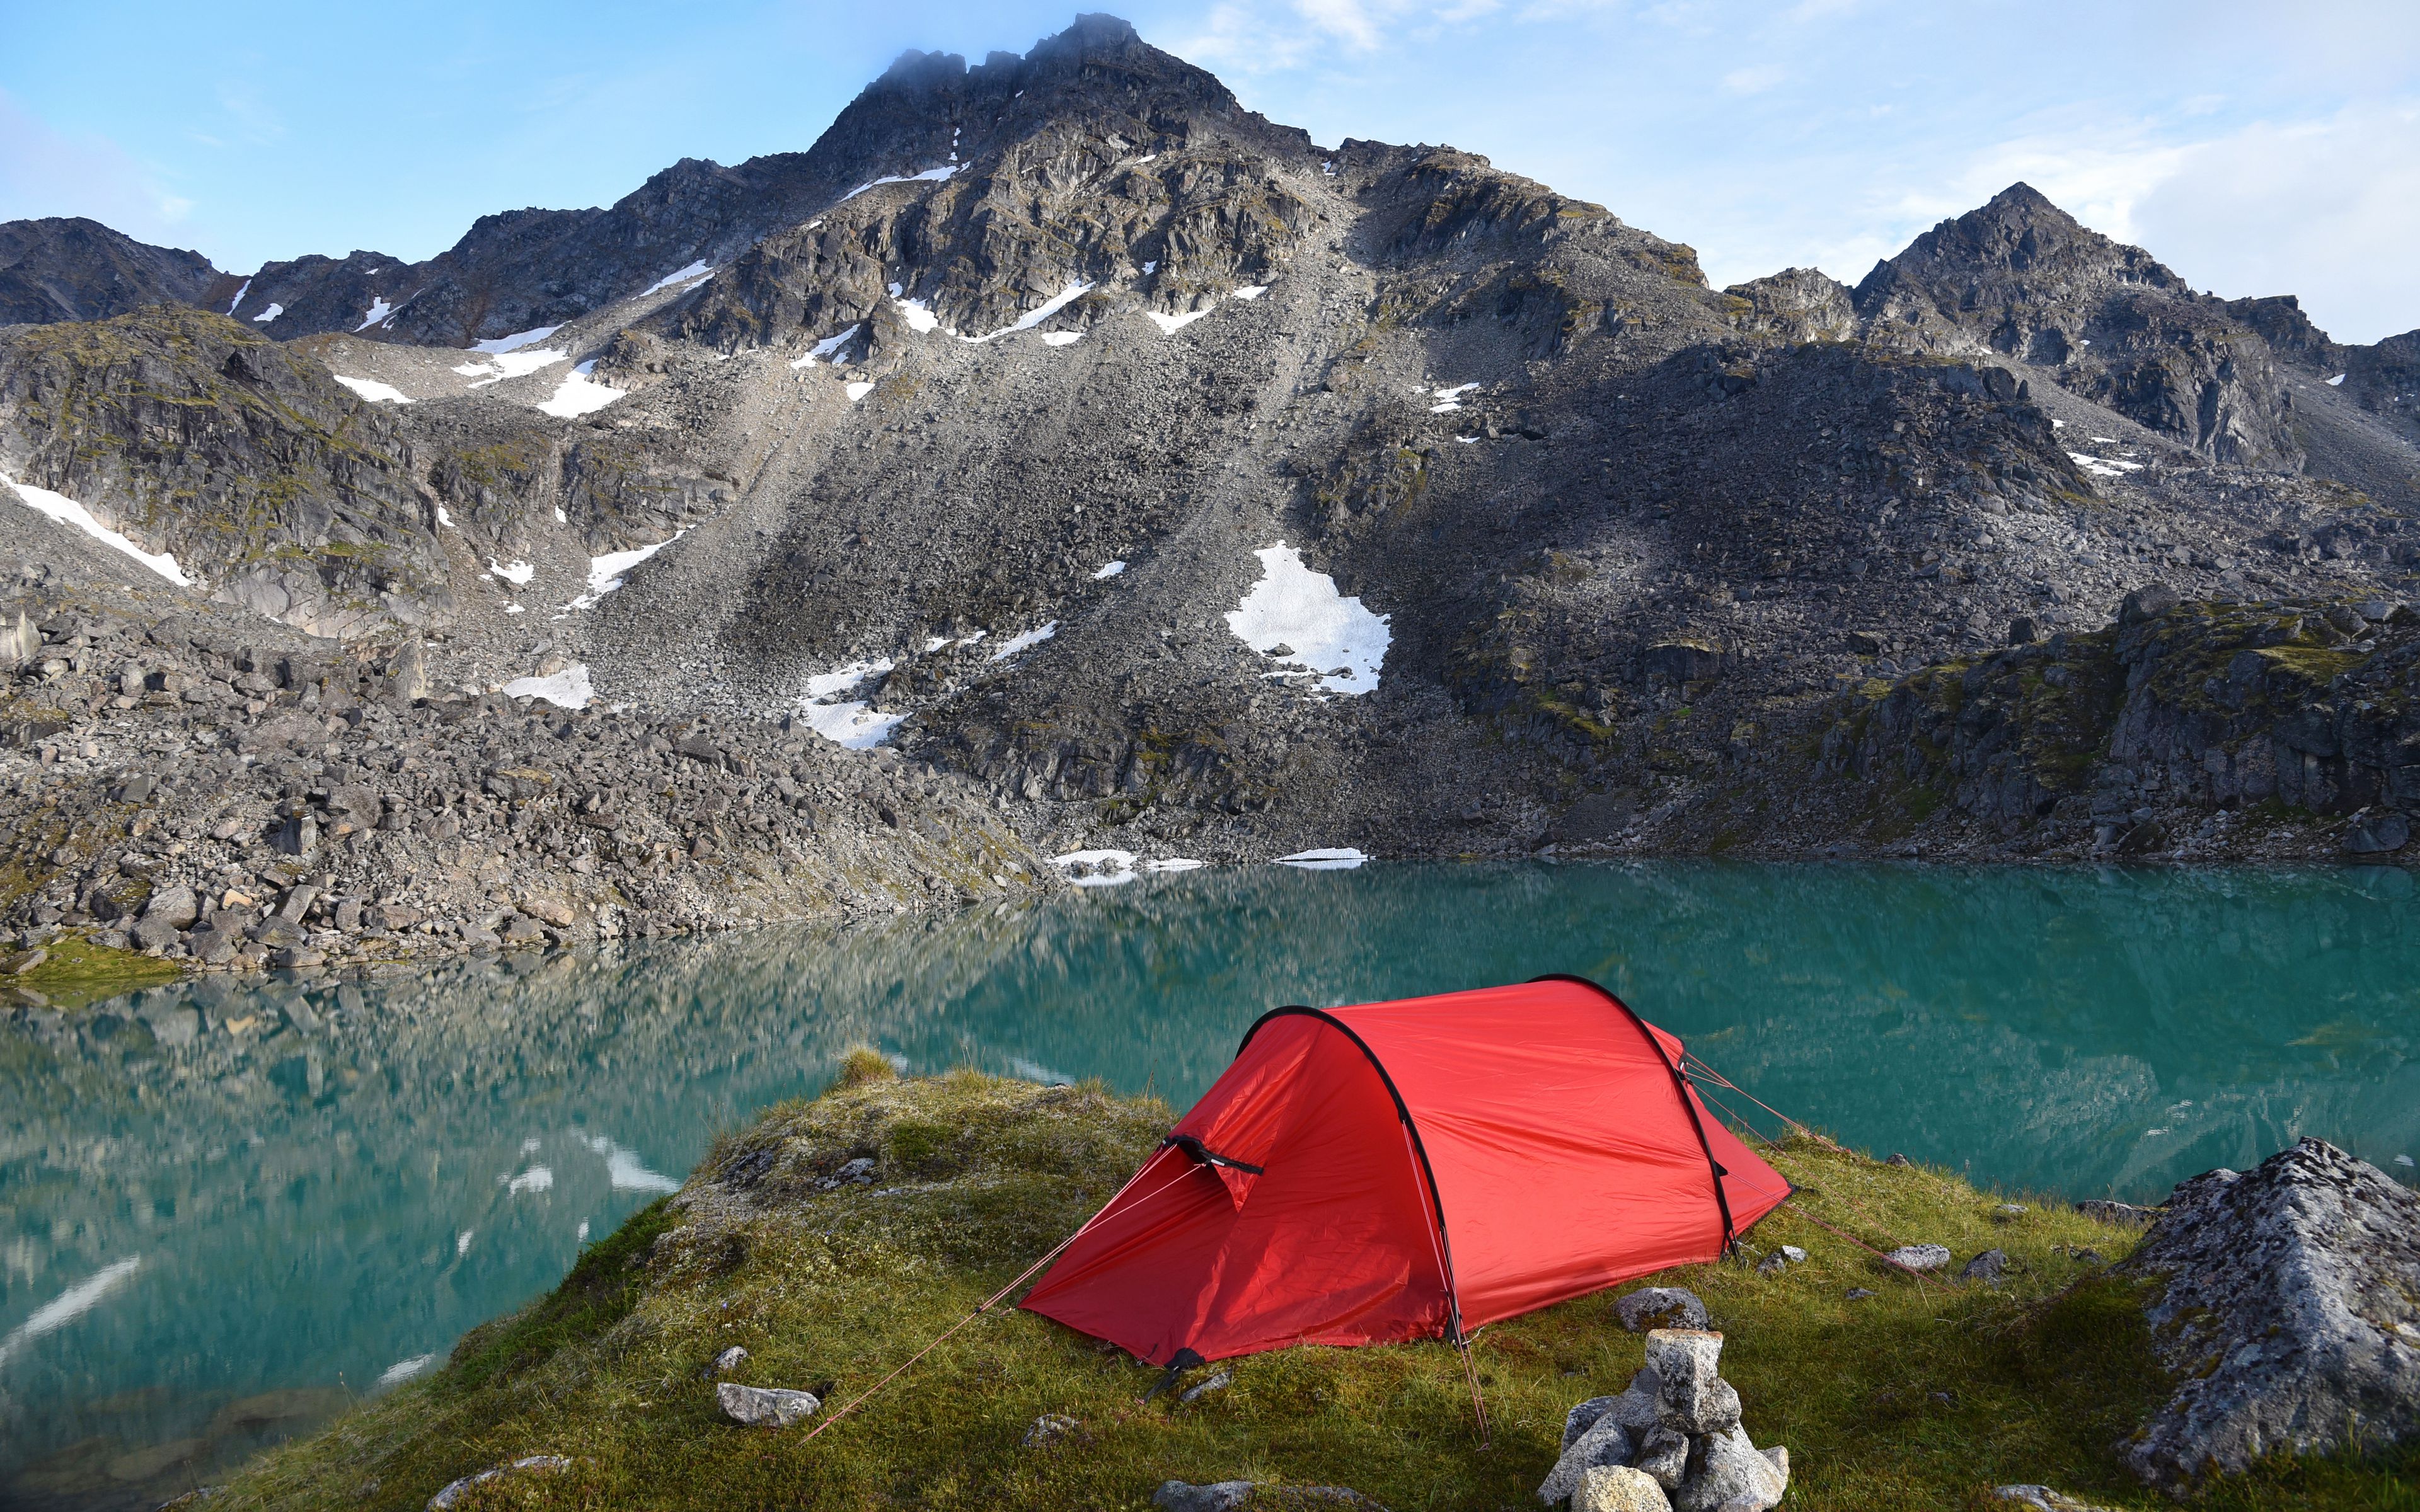 Mountains camping. Саяны палатка. Нахазо кемпинг. Домбай поход с палатками. Домбай 5 палатка.